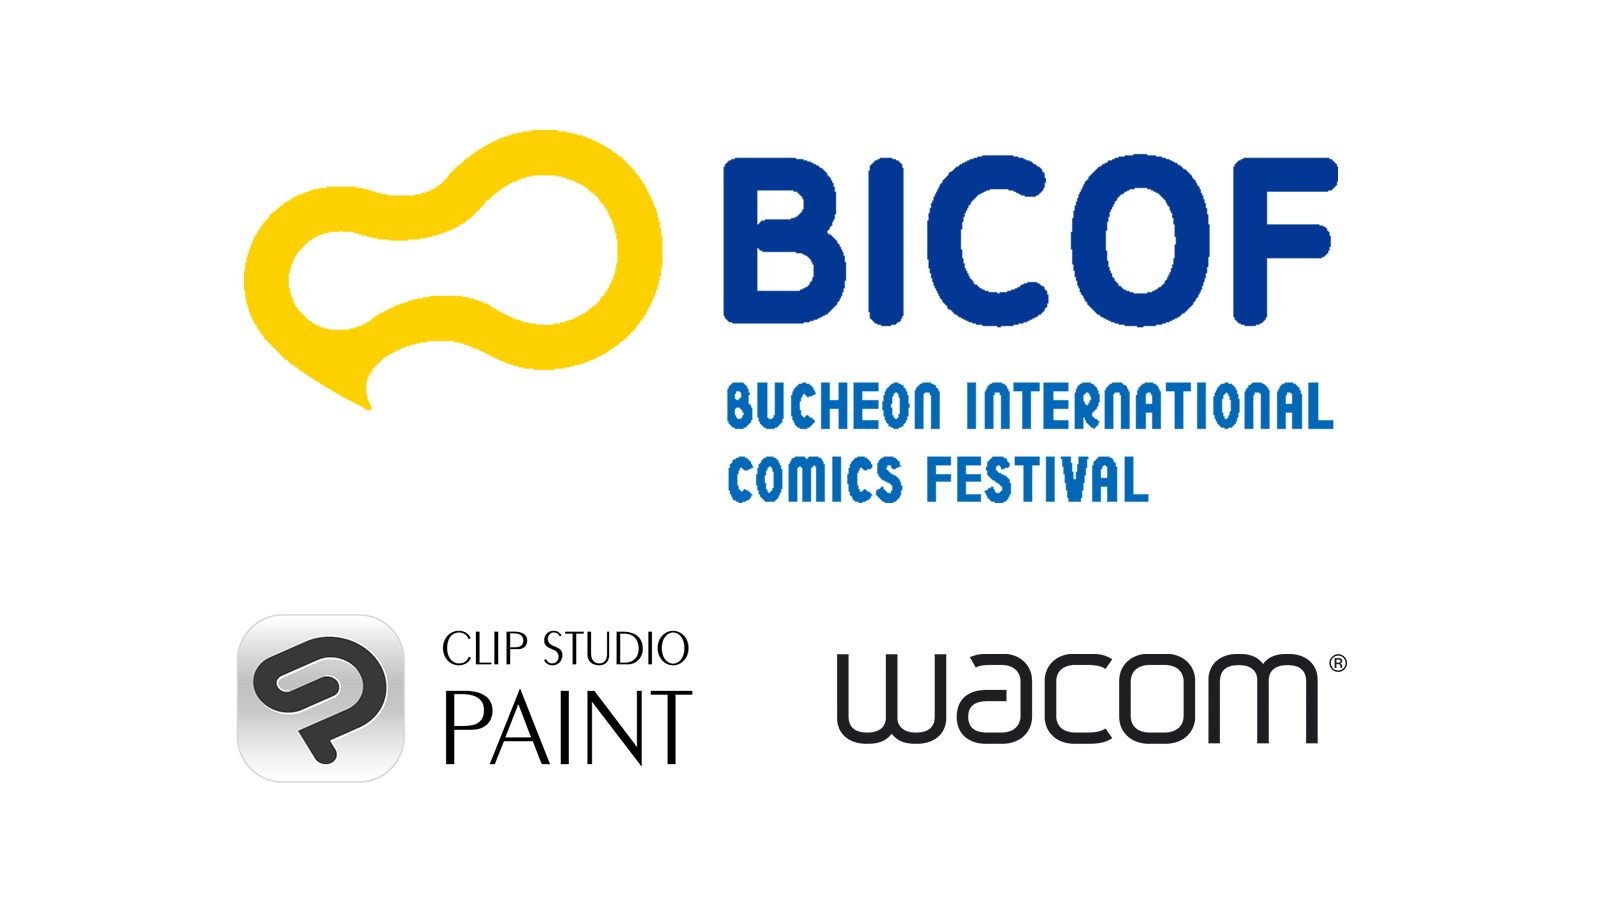 Clip Studio Paint to Jointly Exhibit with Wacom Korea at BICOF, Korea’s Largest Comics Festival